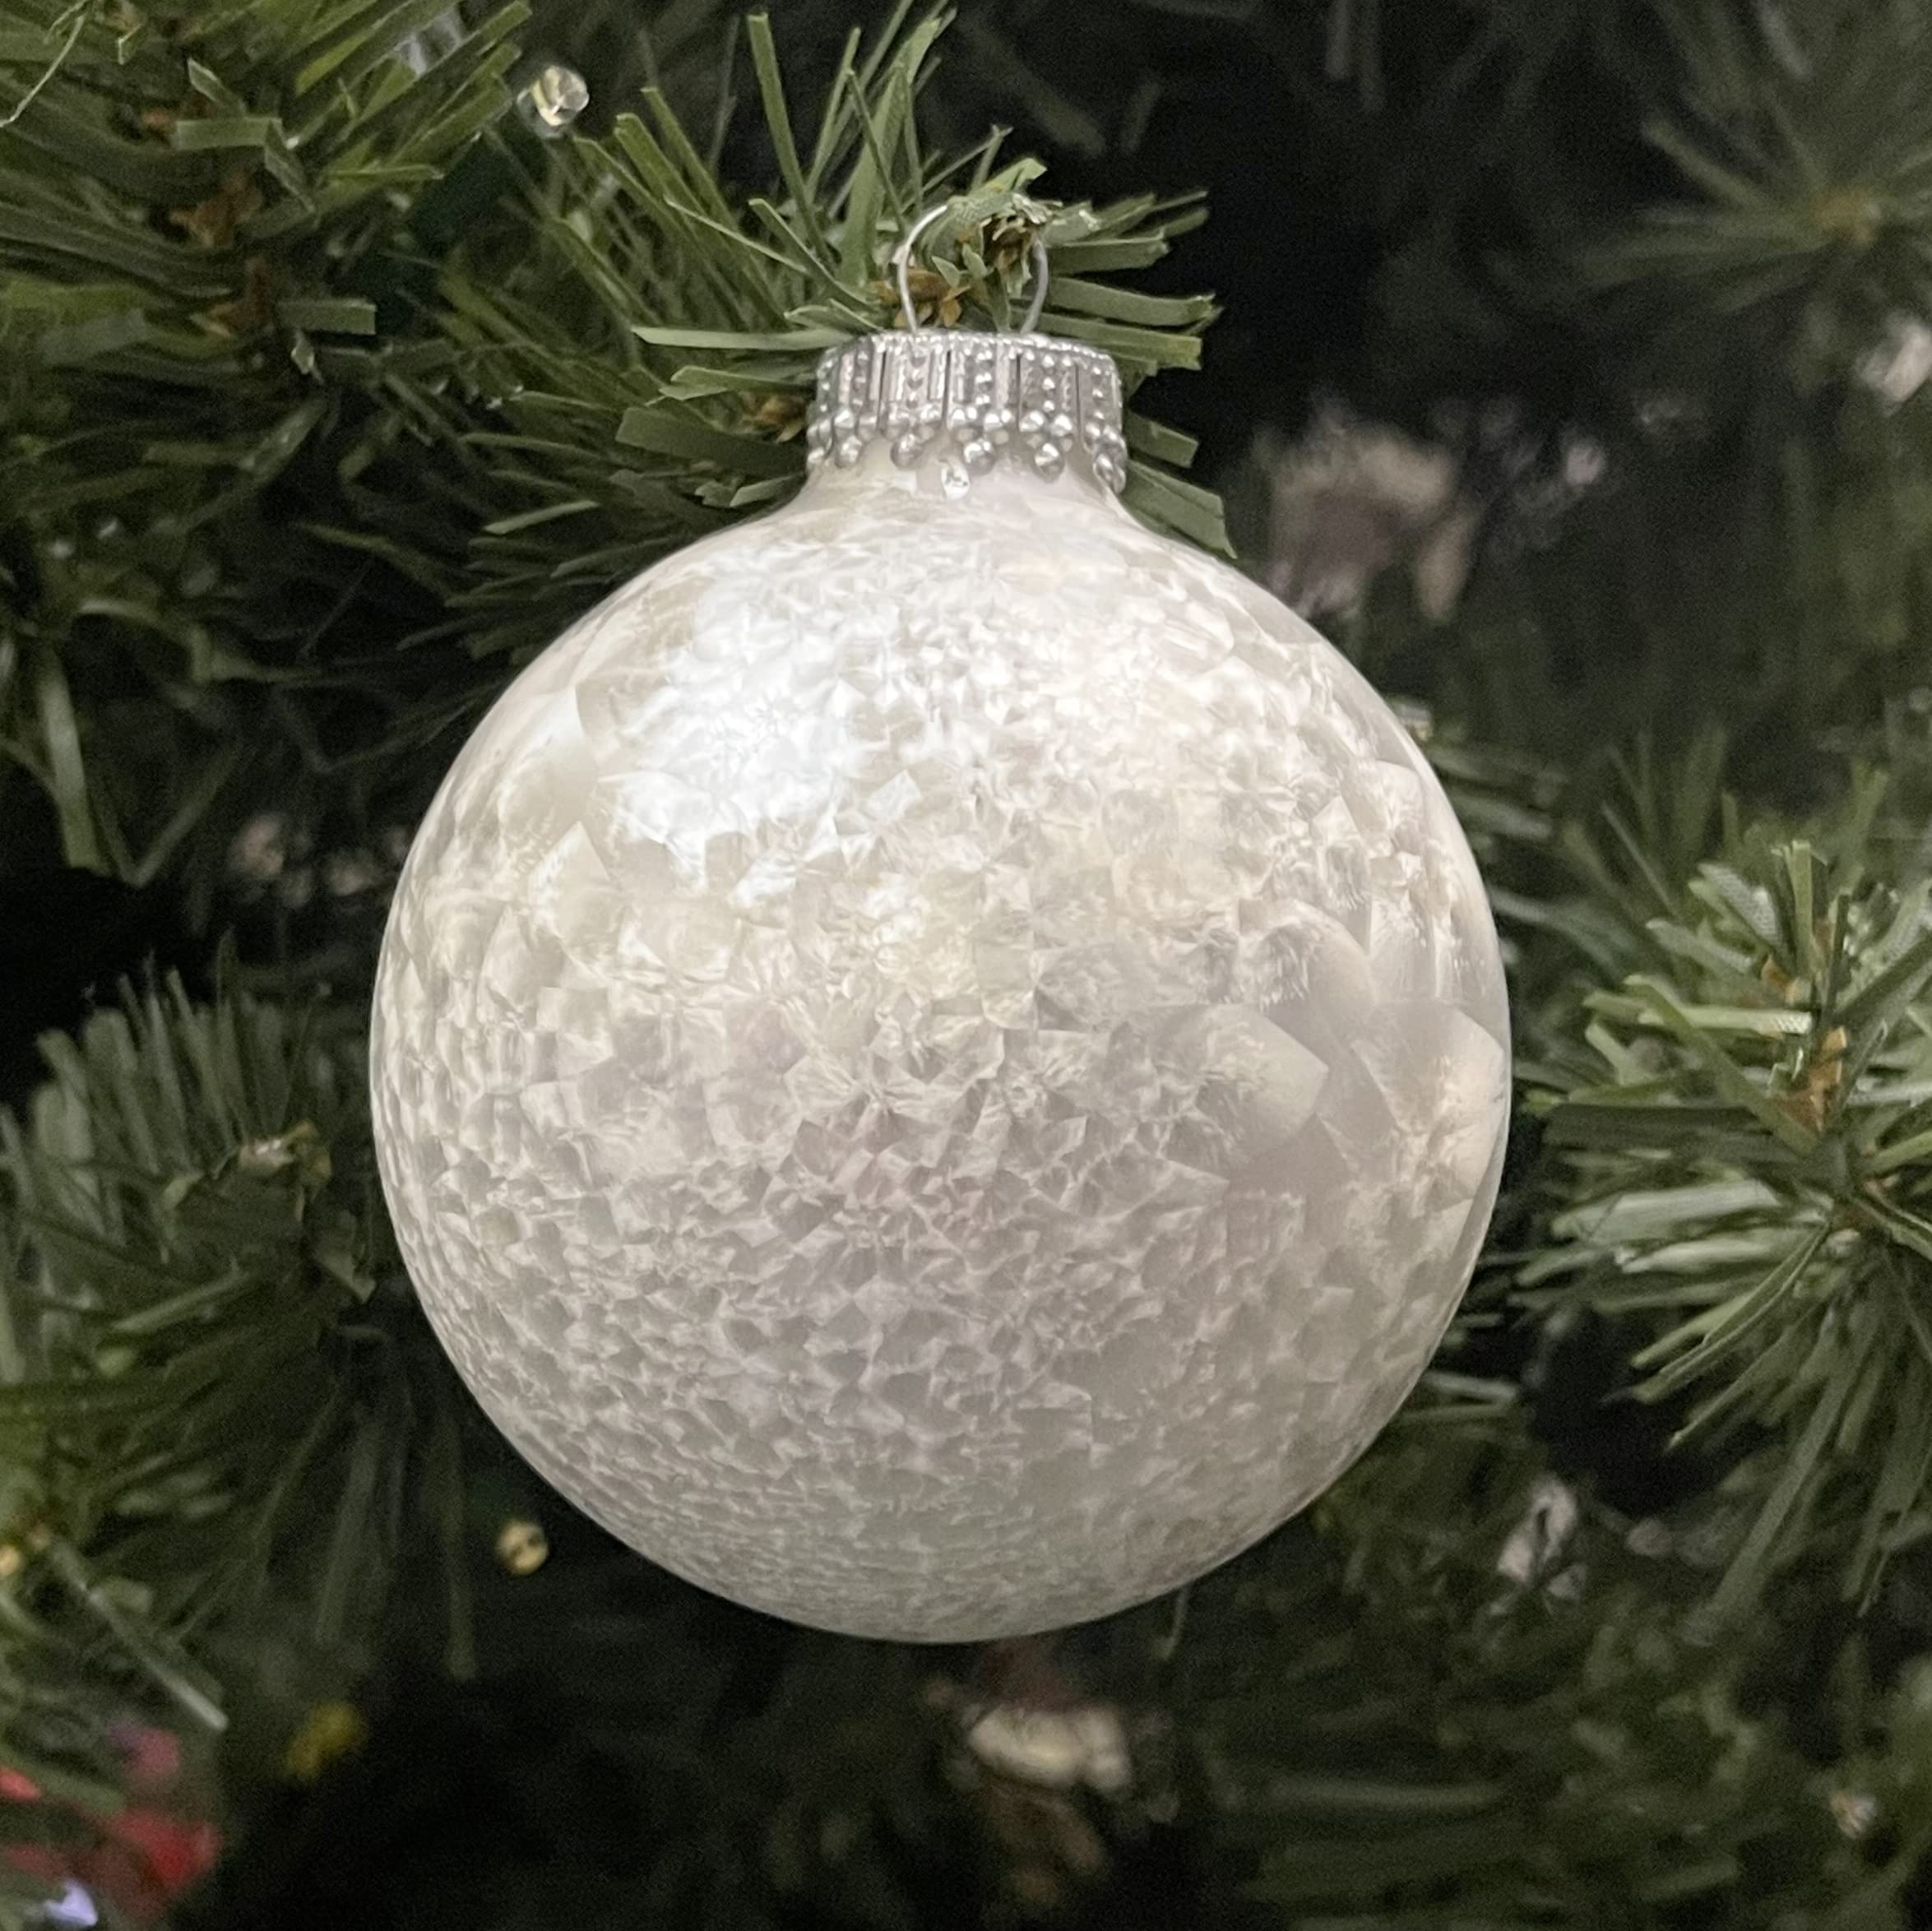 2 5/8 (67mm) Ball Ornaments, Silver Caps, Pearl Icelock, 6/Box